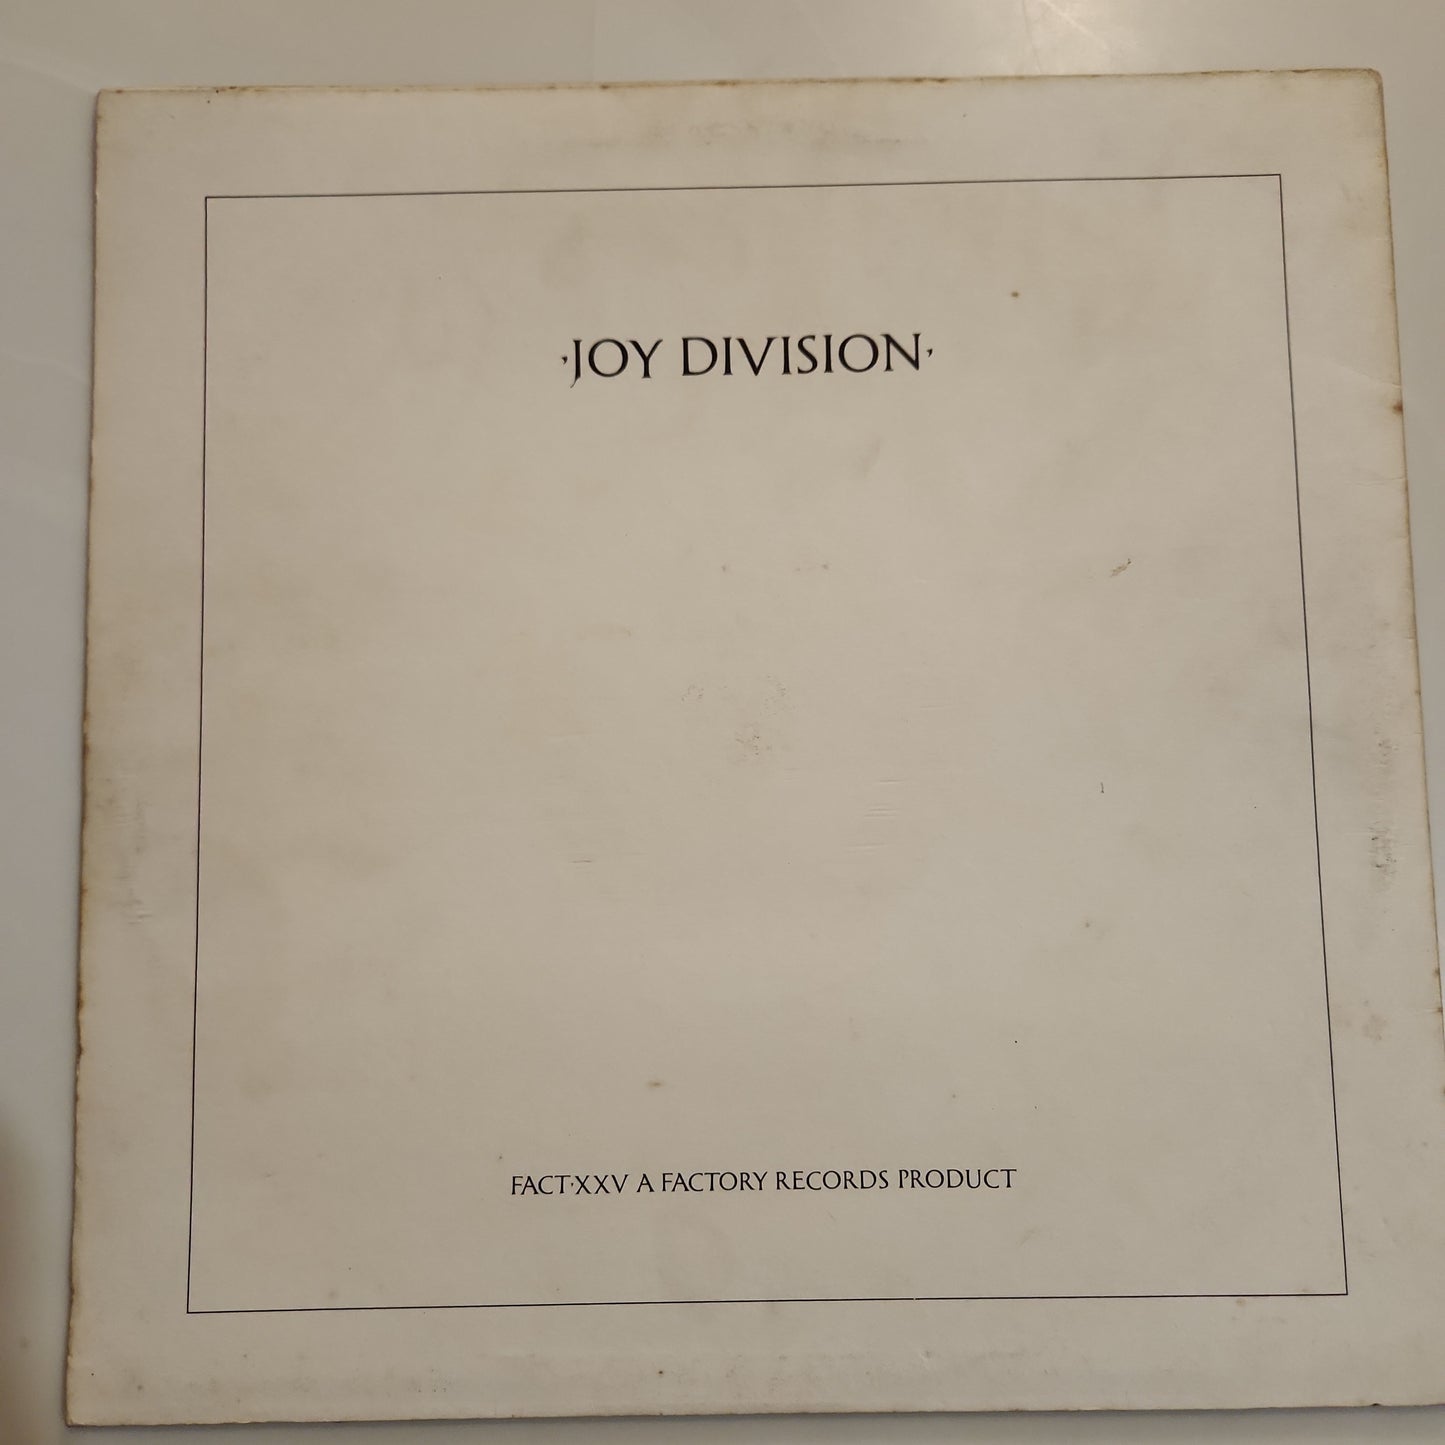 JOY DIVISION - Closer